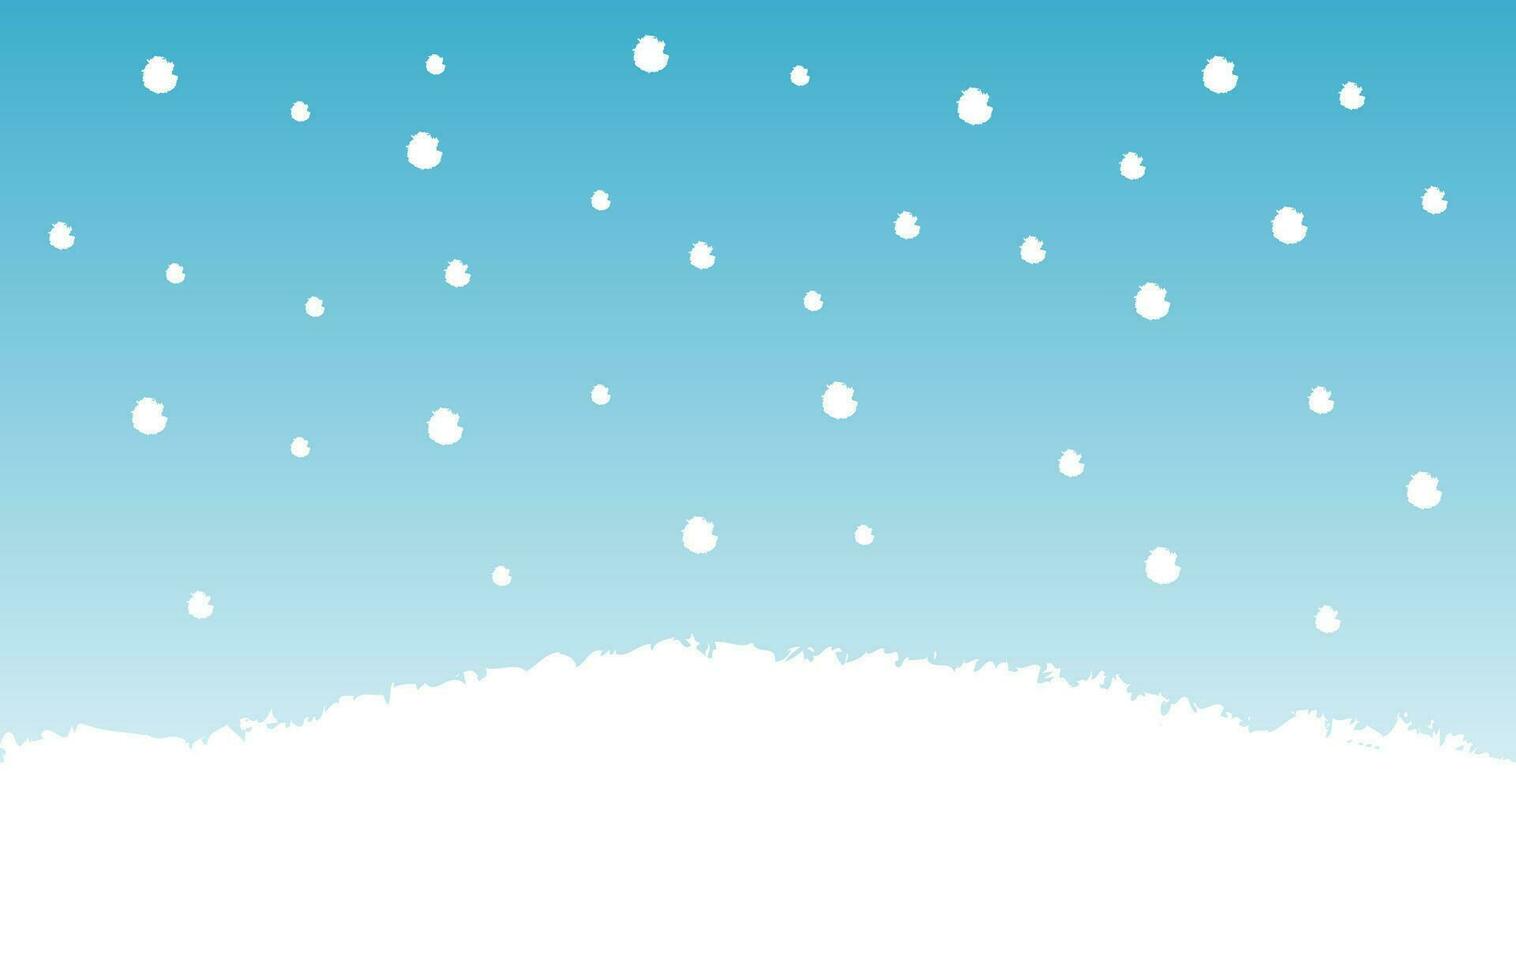 snow background for winter season vector